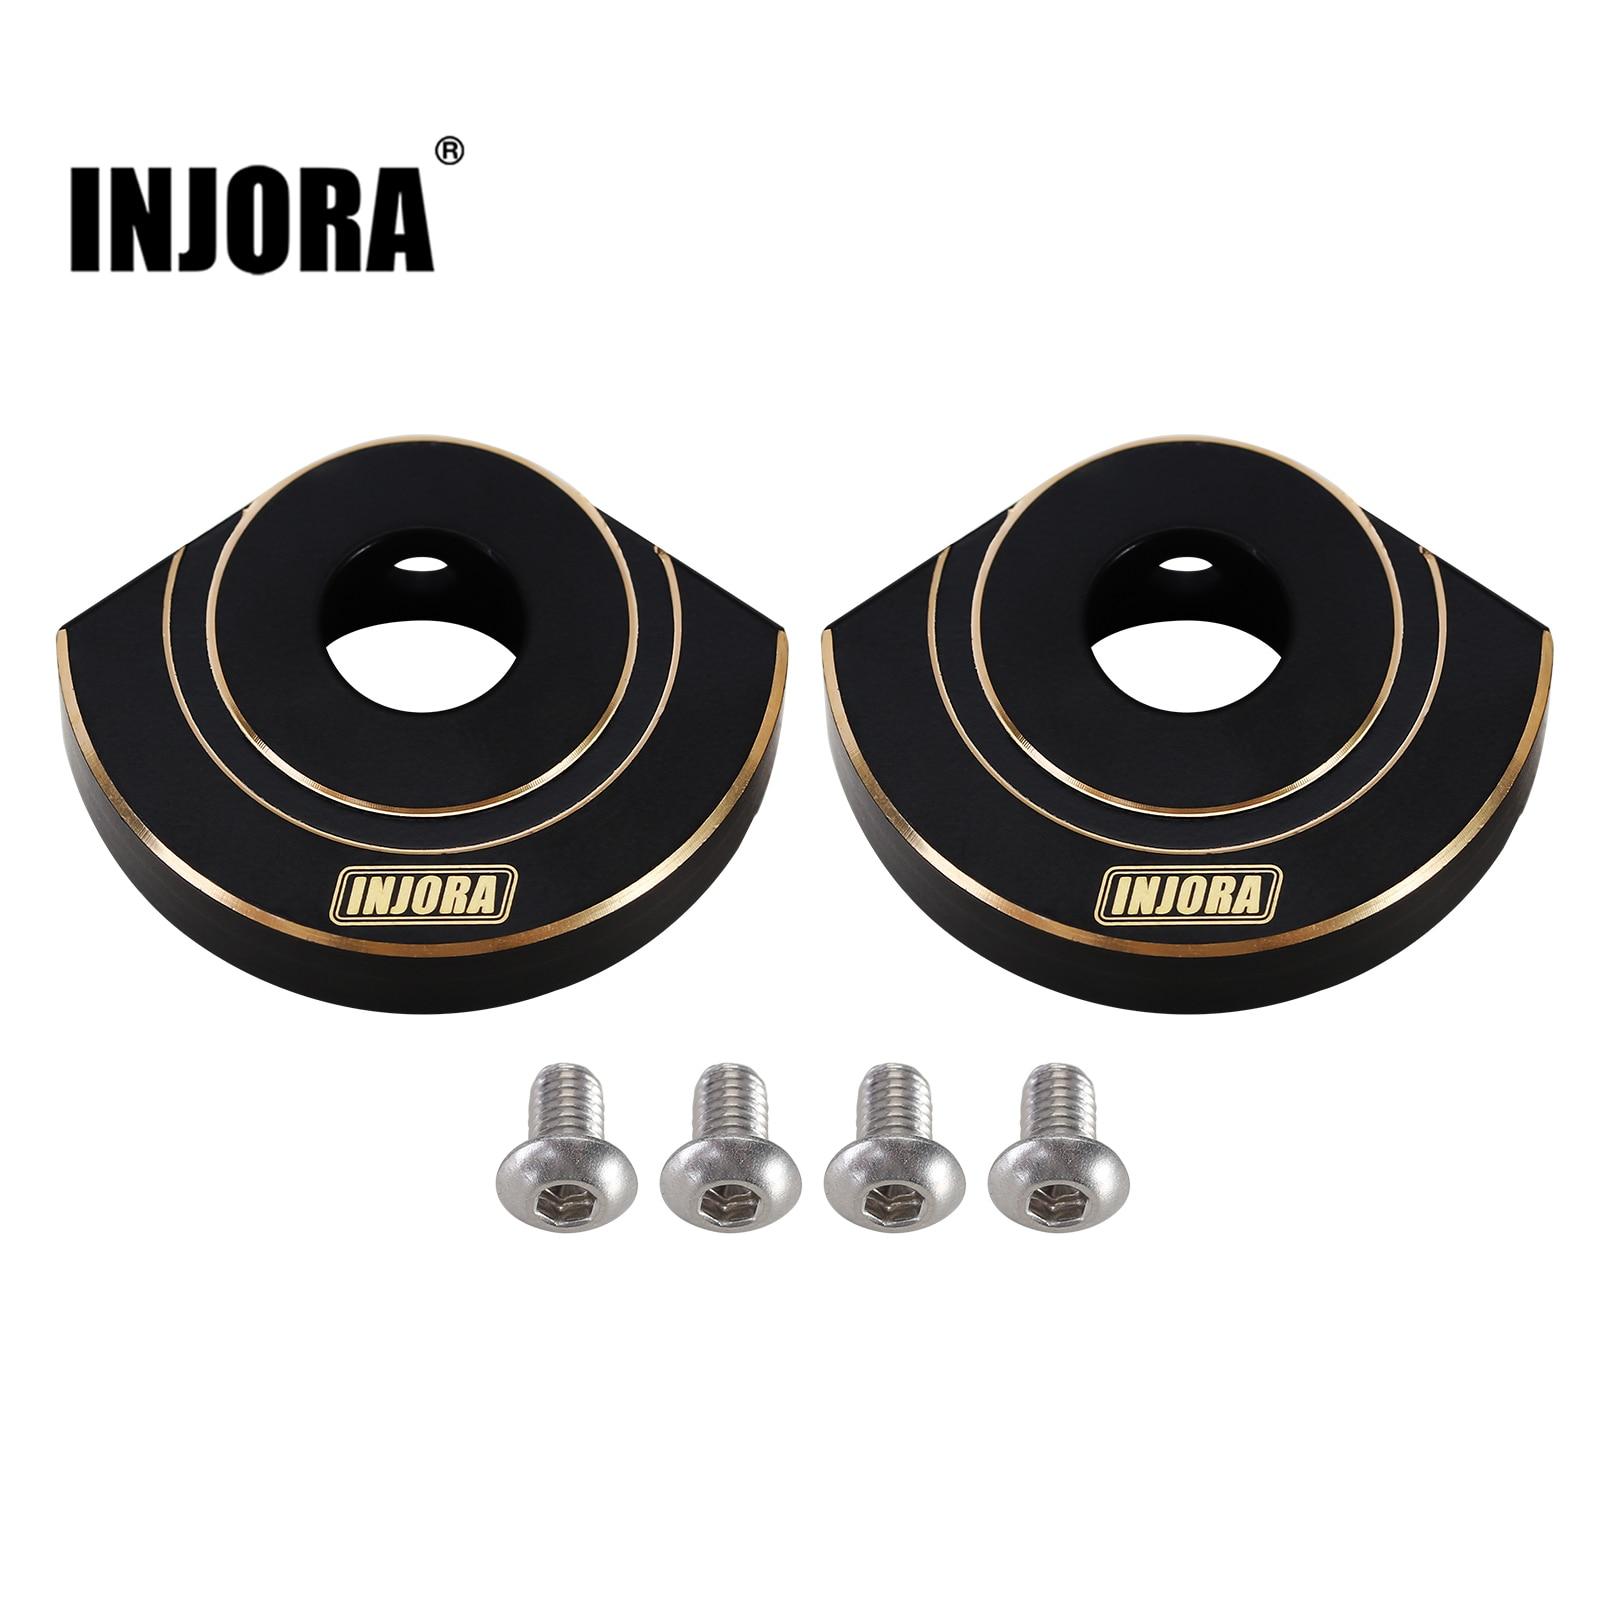 INJORA-Black-Coating-Brass-Rear-Axle-Tube-Cap-for-1-10-RC-Crawler-Axial-SCX10-PRO.jpg